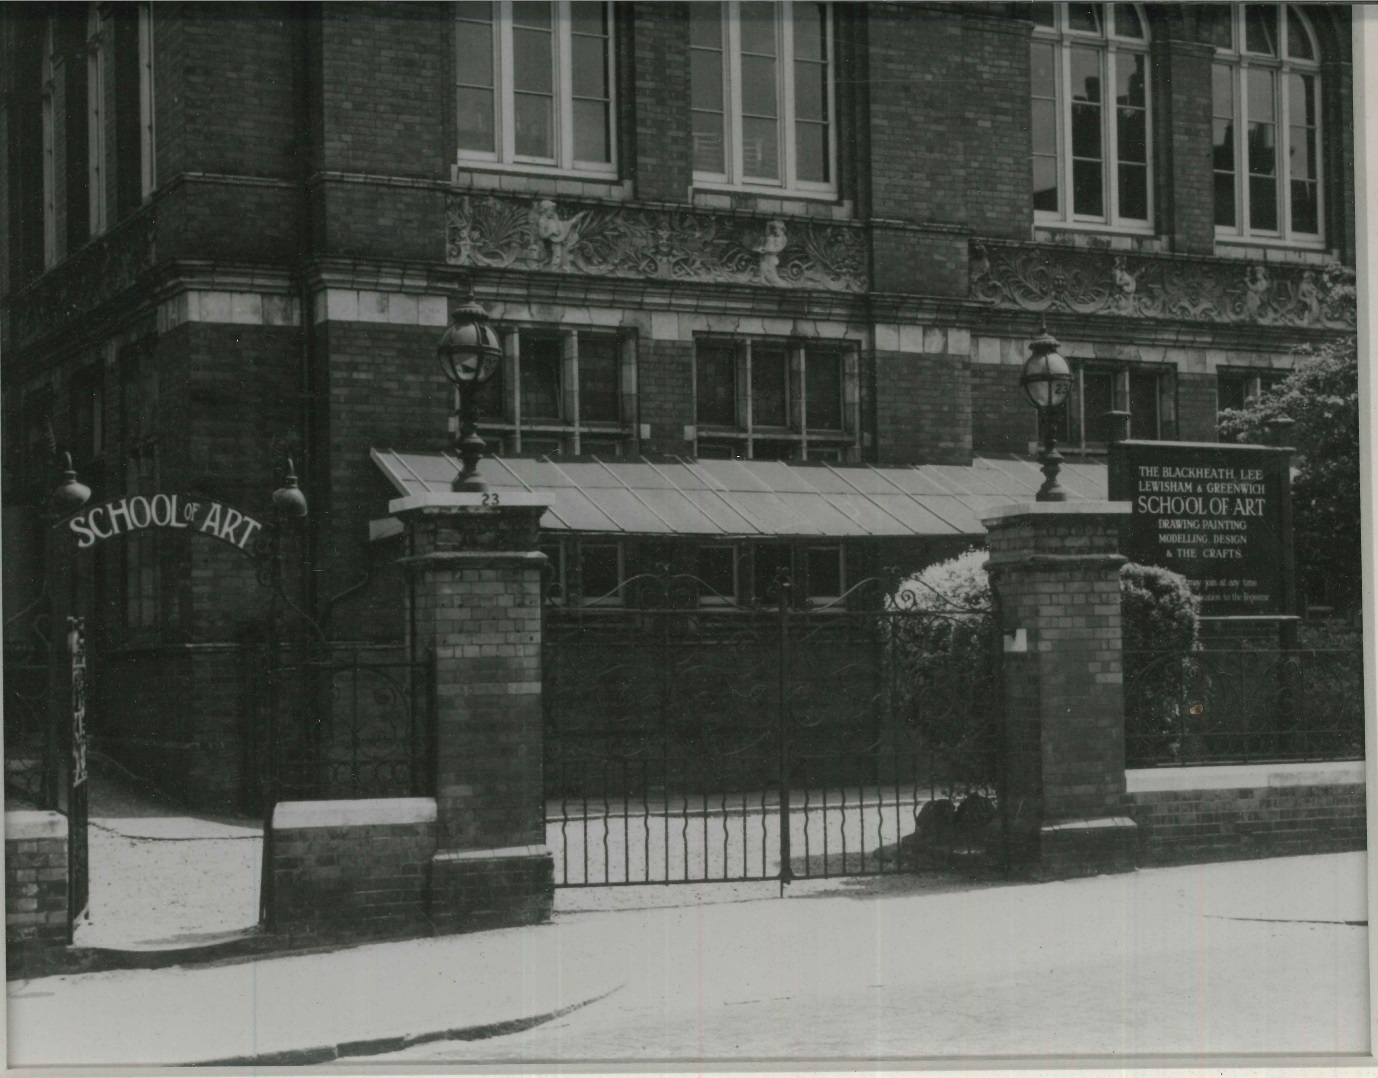 Entrance gate to the Blackheath School of Art, circa 1930s.